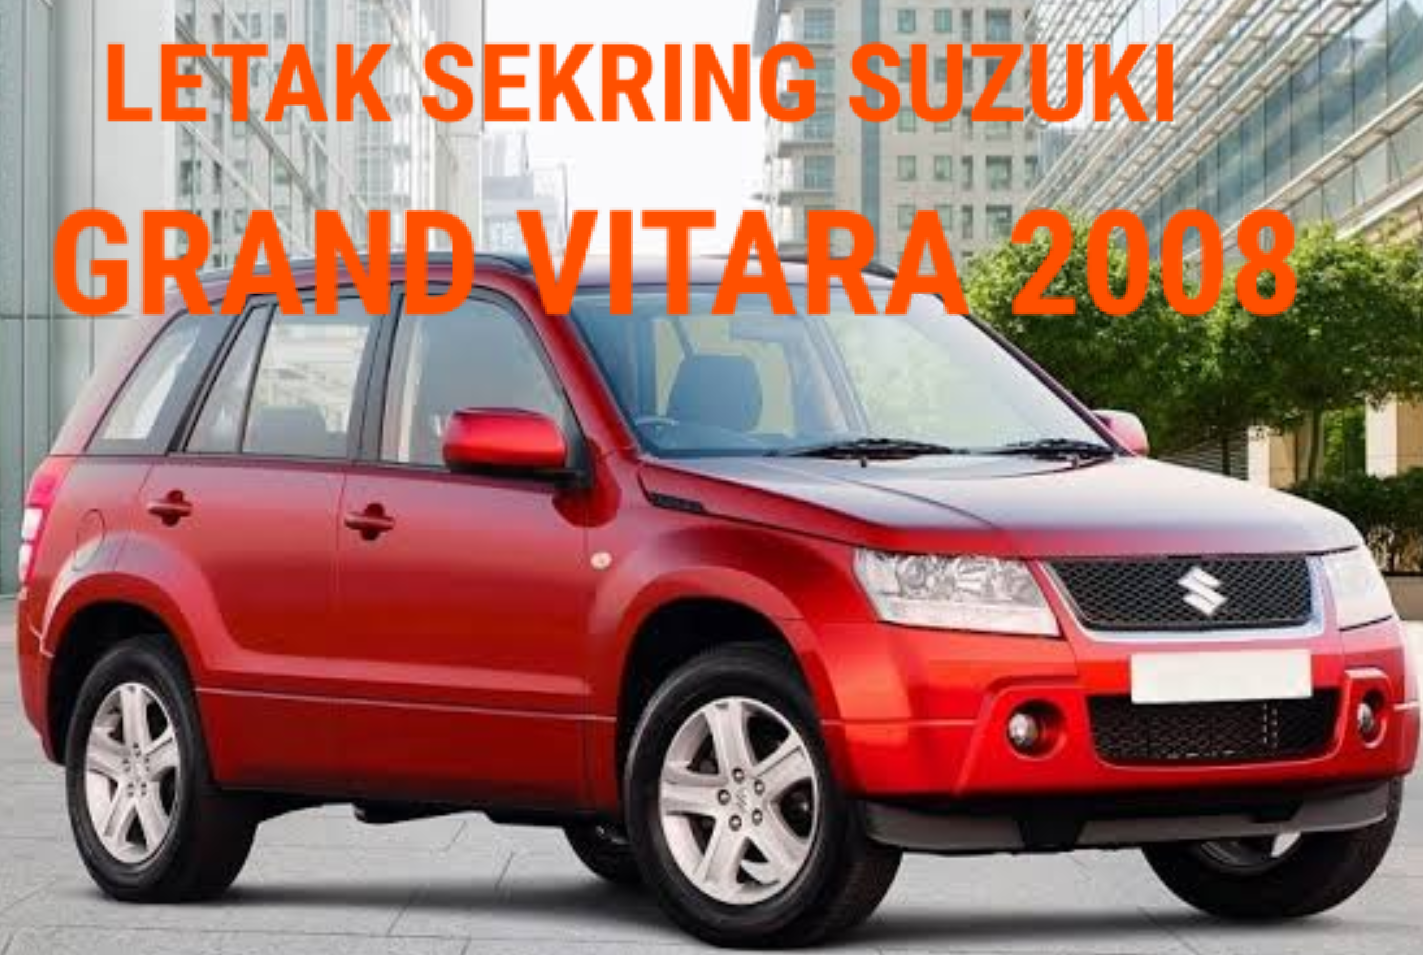 Diagram Sekring Suzuki Grand Vitara 2008 - Fajarmaker.com